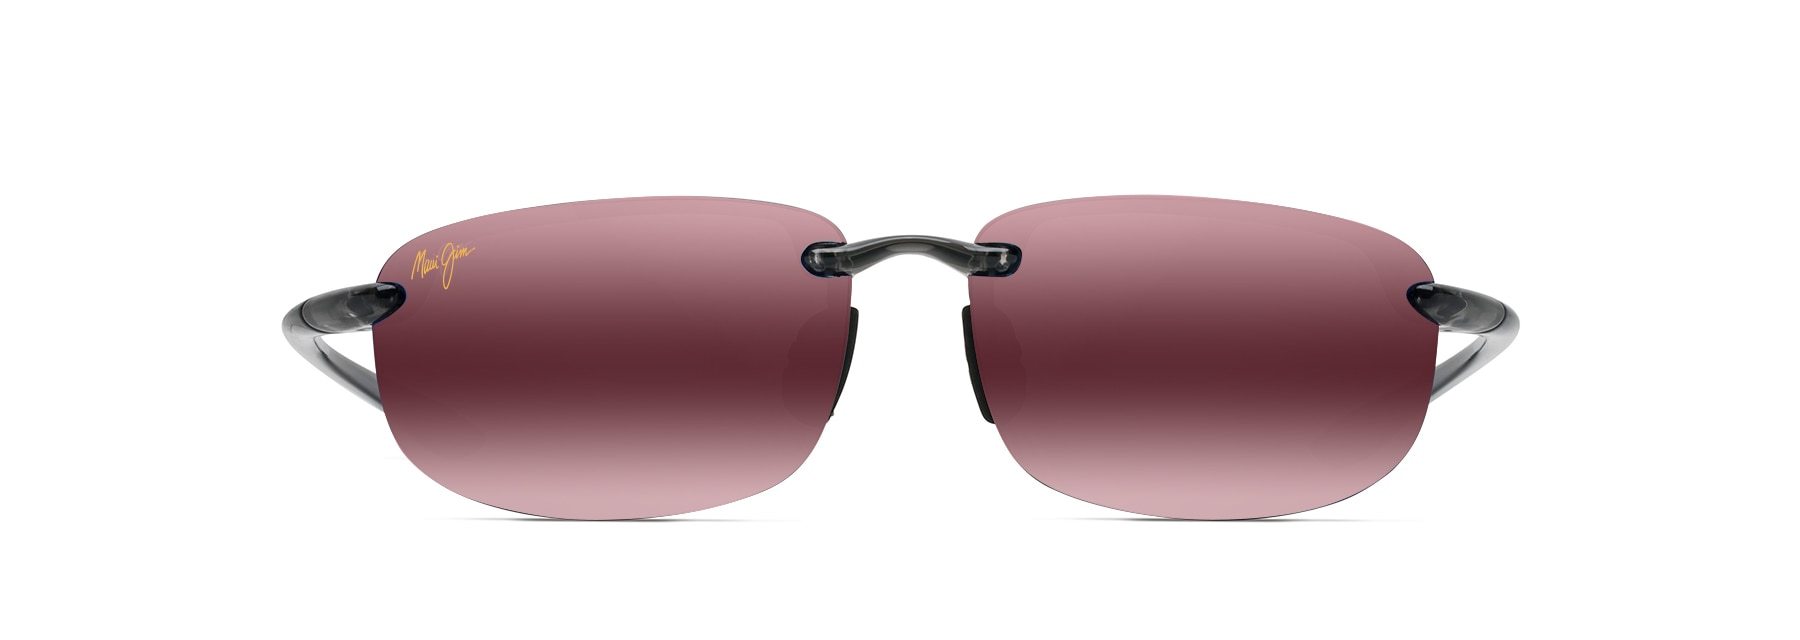 MyMaui Ho'Okipa MM407-015 Sunglasses